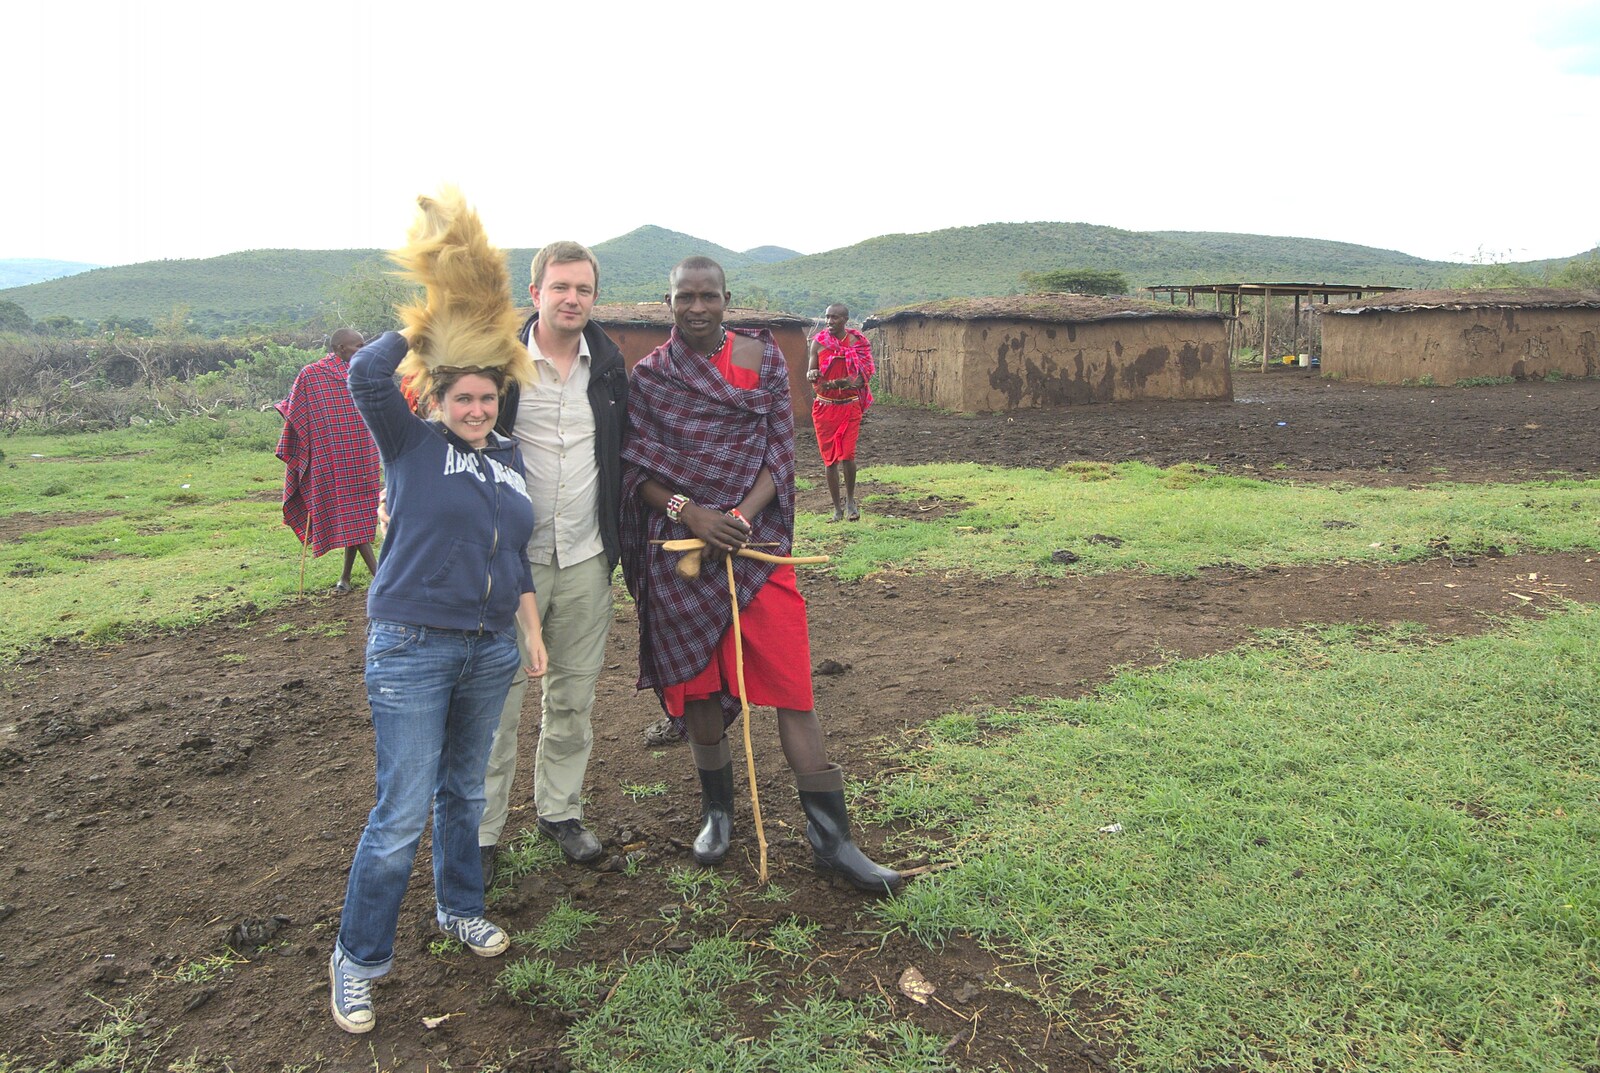 Maasai Mara Safari and a Maasai Village, Ololaimutia, Kenya - 5th November 2010: Isobel joins in